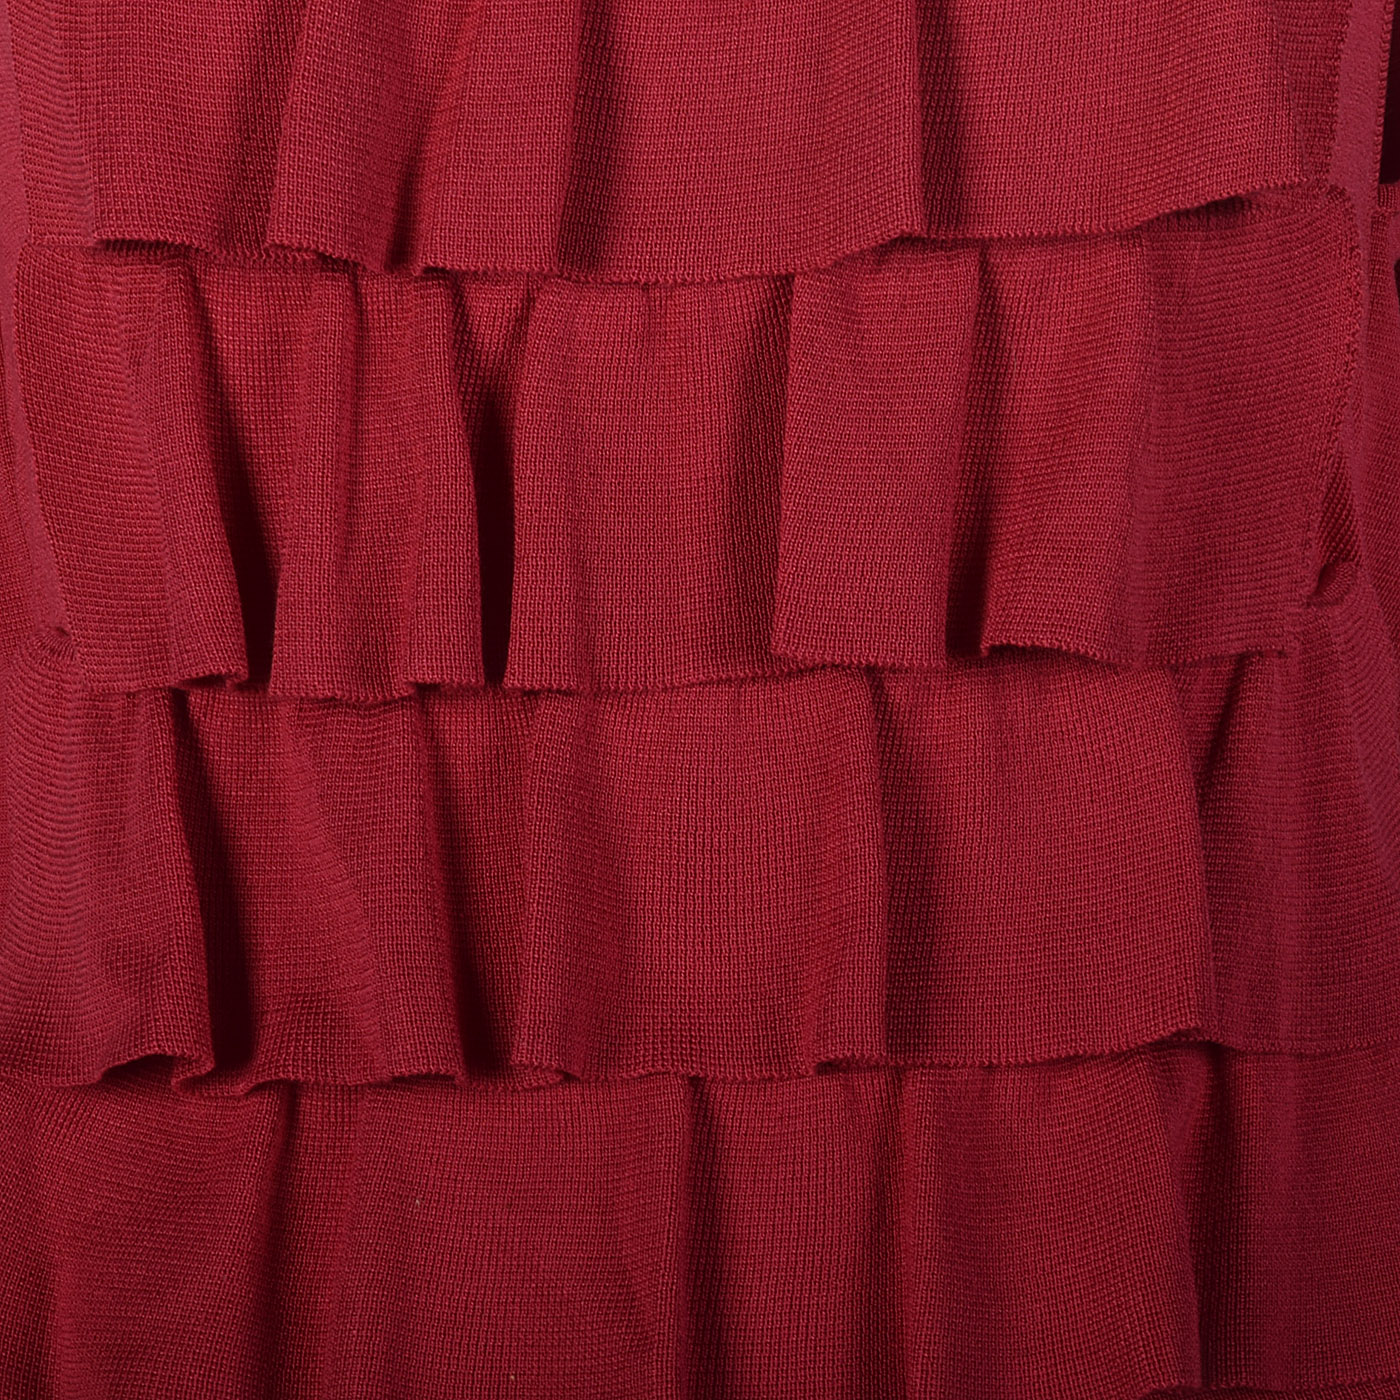 XS-Small Giambattista Valli Magenta Knit Dress